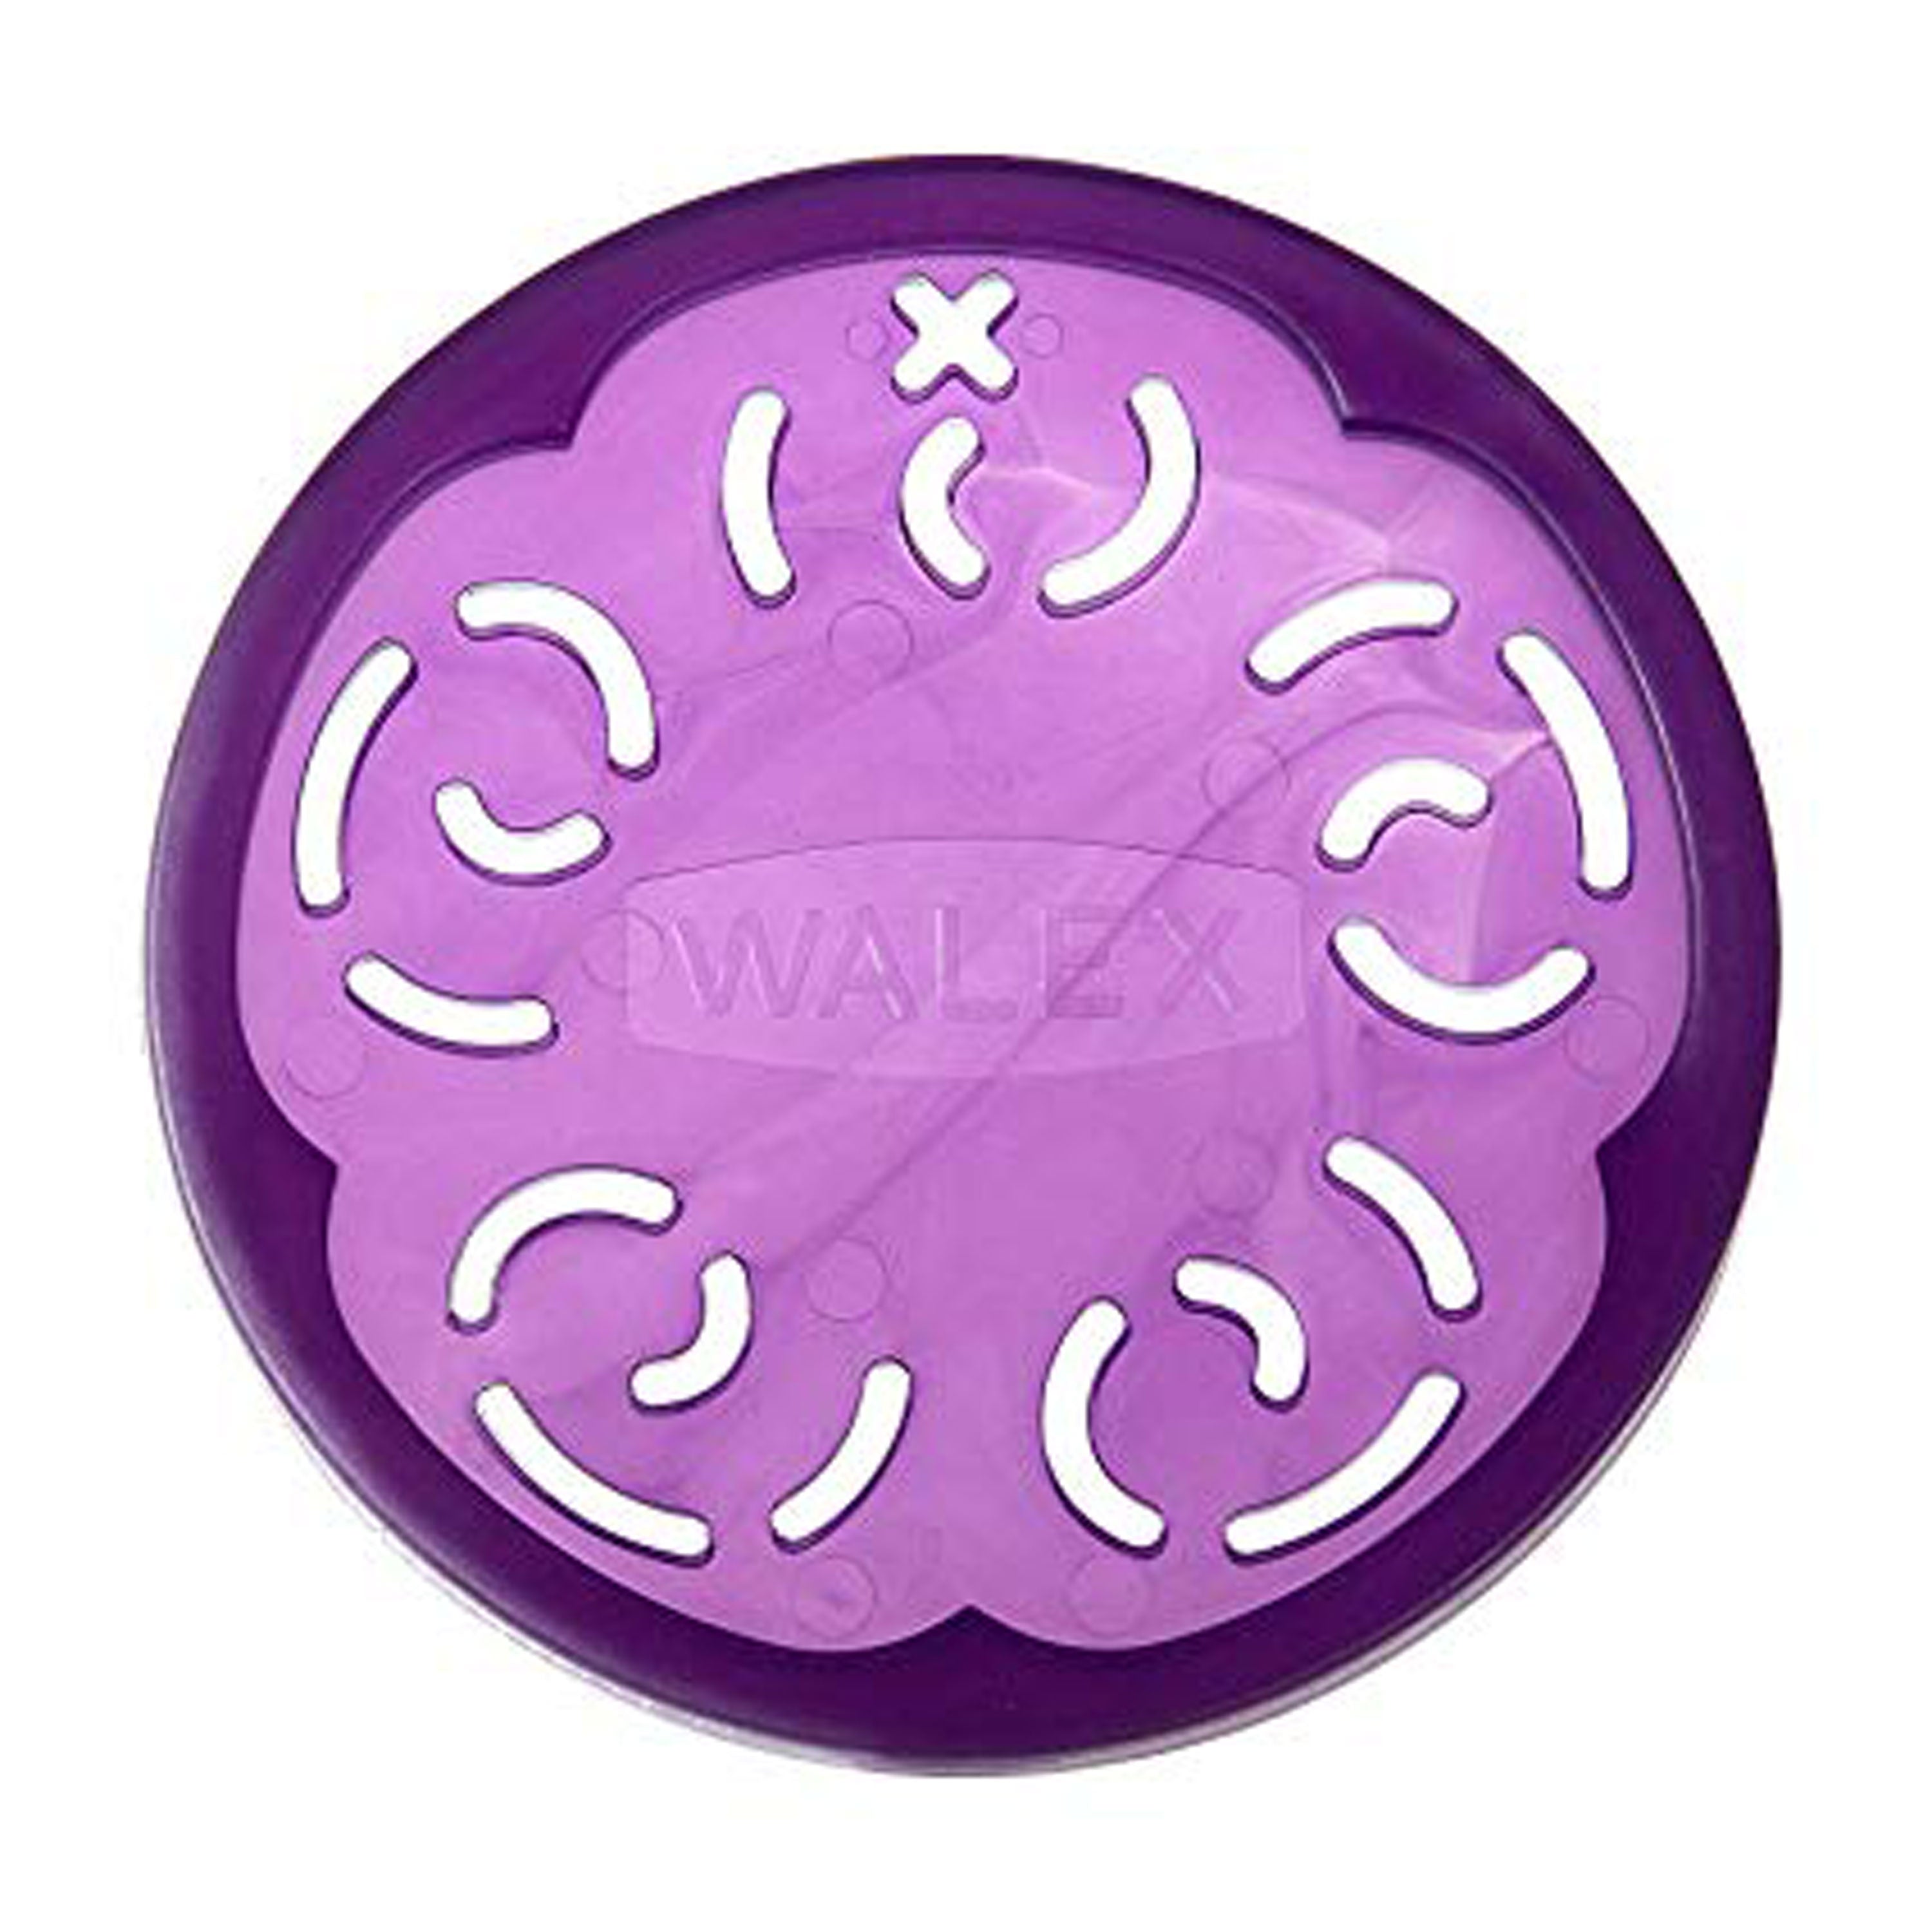 Walex OVAFLAV1 Portable Ovation Air Freshener - Lavender Scent, 24 Pack